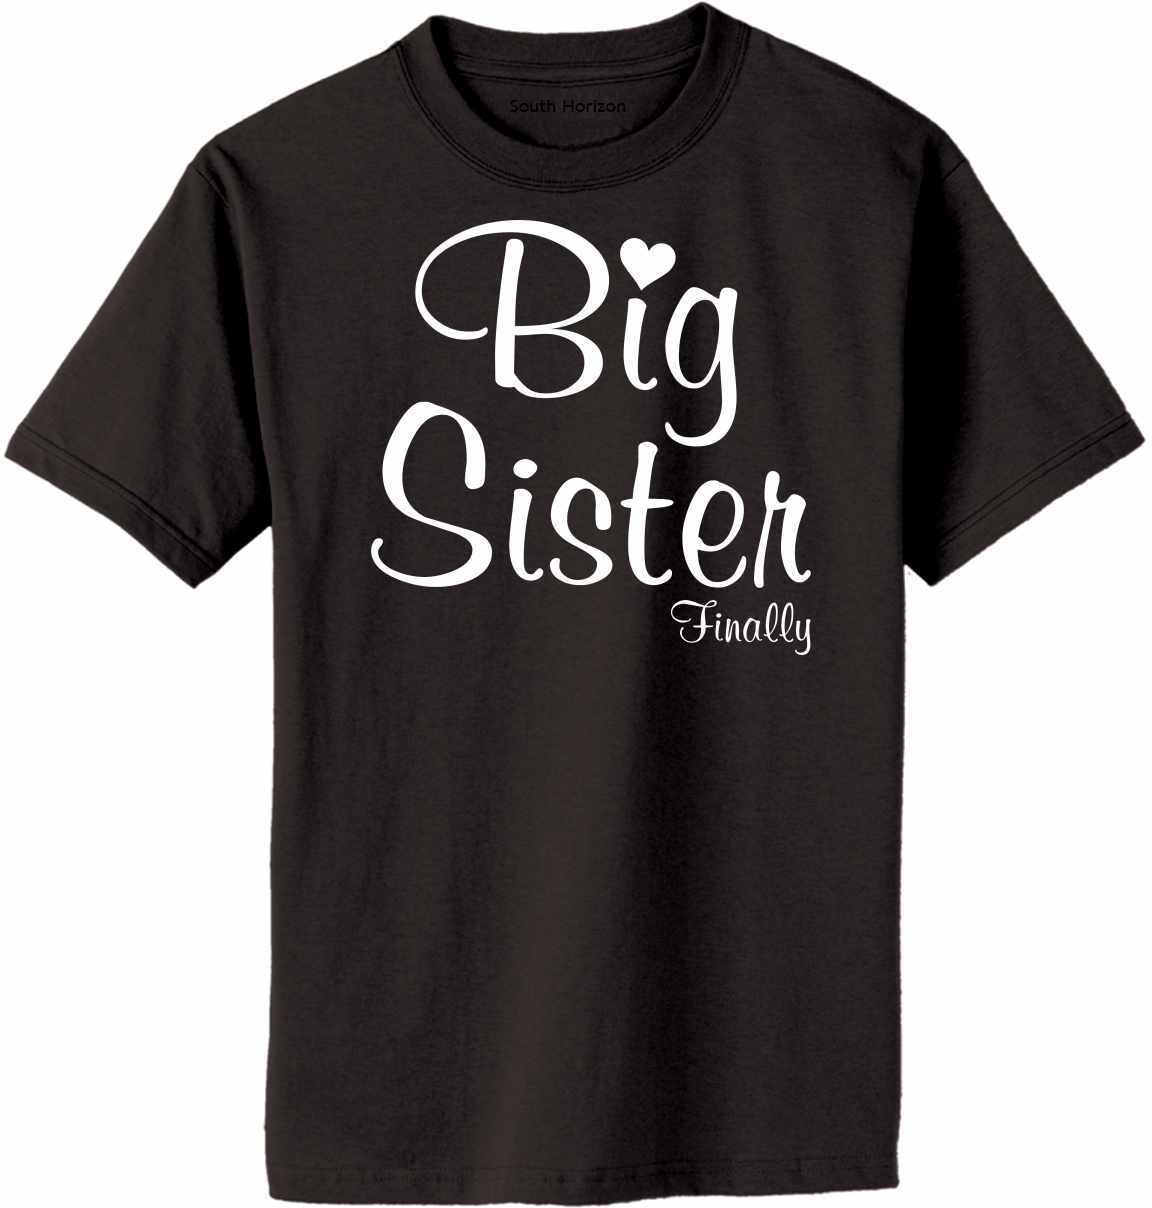 Big Sister Finally on Adult T-Shirt (#1263-1)